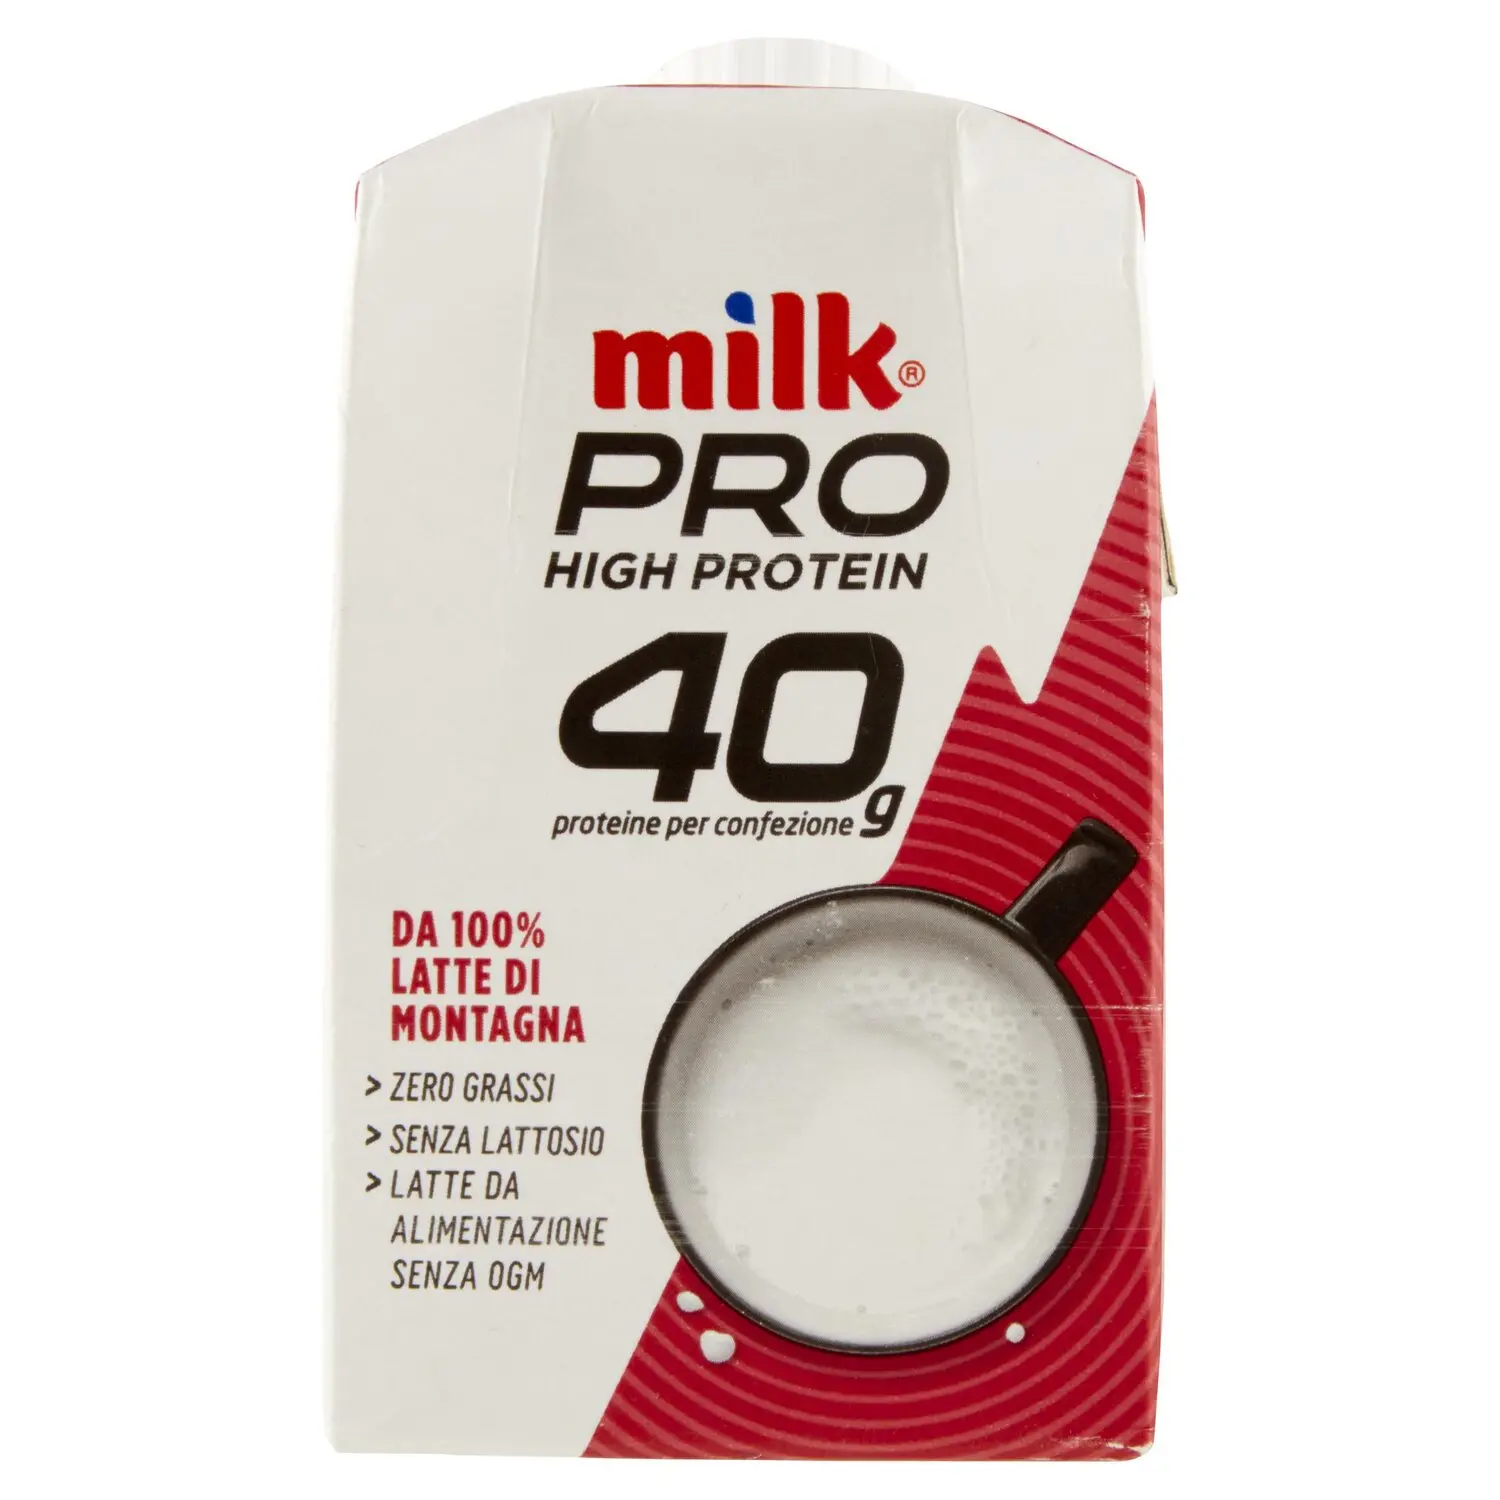 Milk Pro High Protein 40g da 100% Latte di Montagna 500 ml